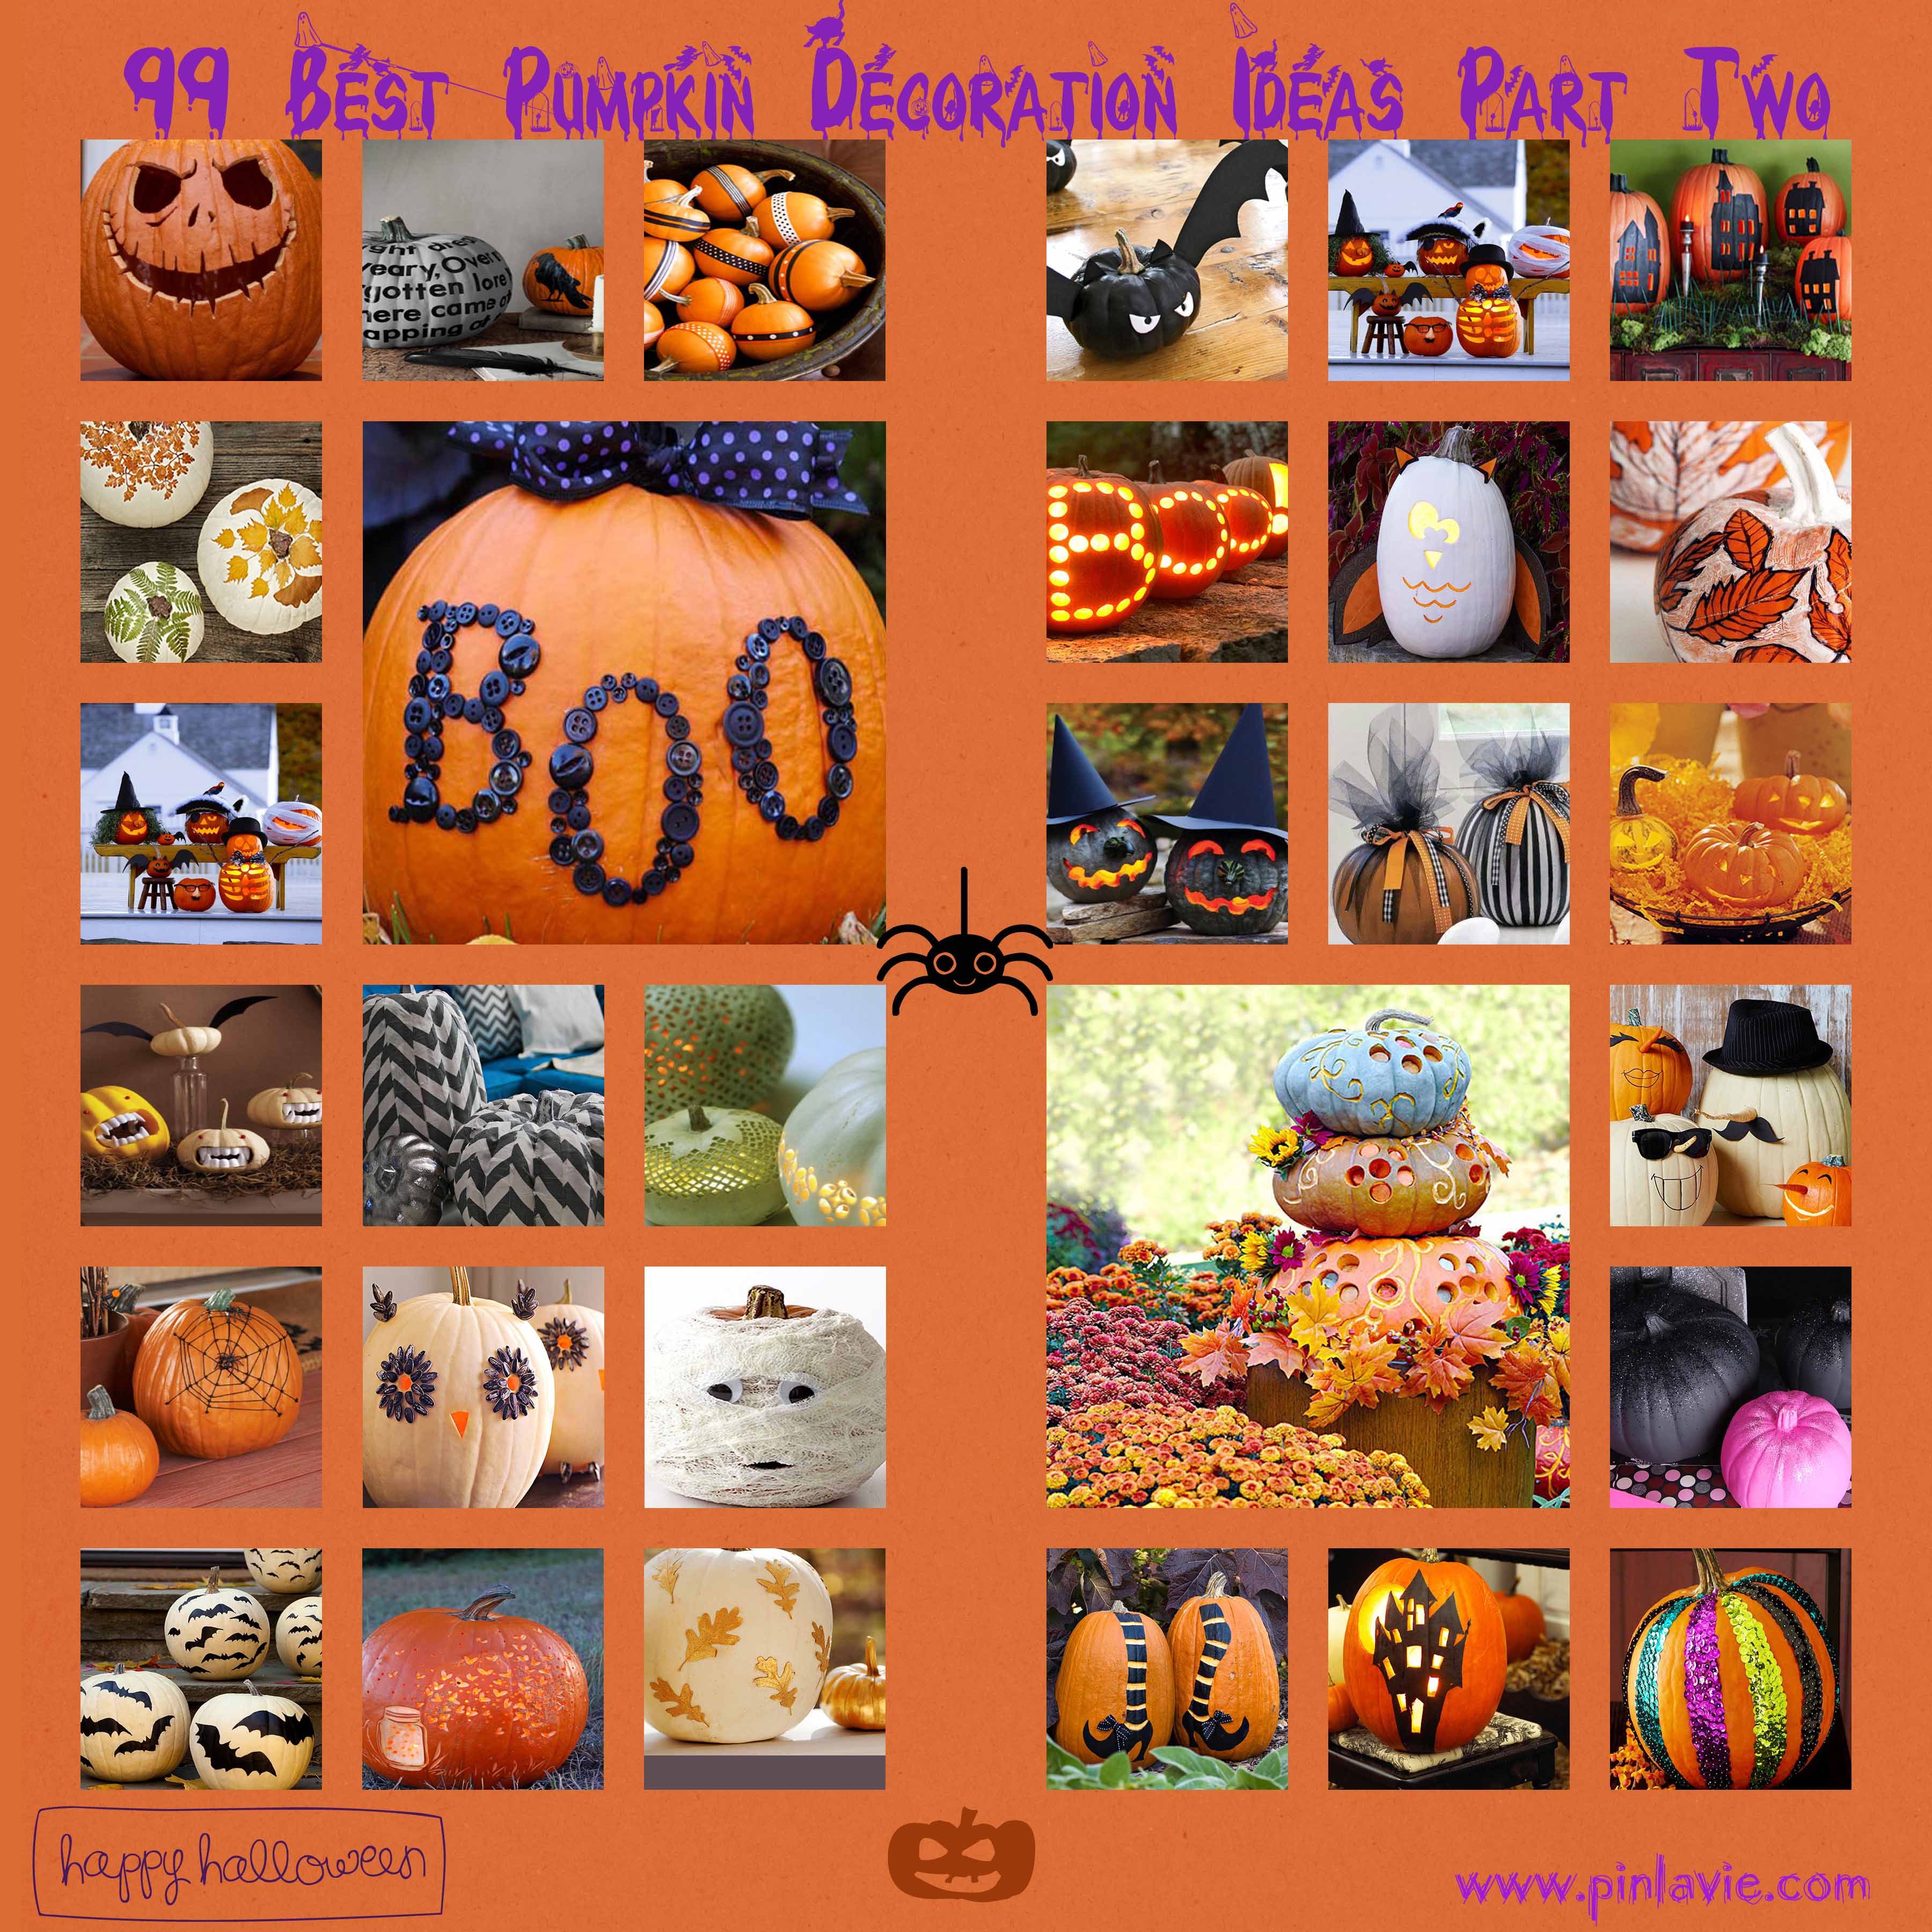 99 Best Pumpkin Decoration Ideas Part Two Pinlavie Com